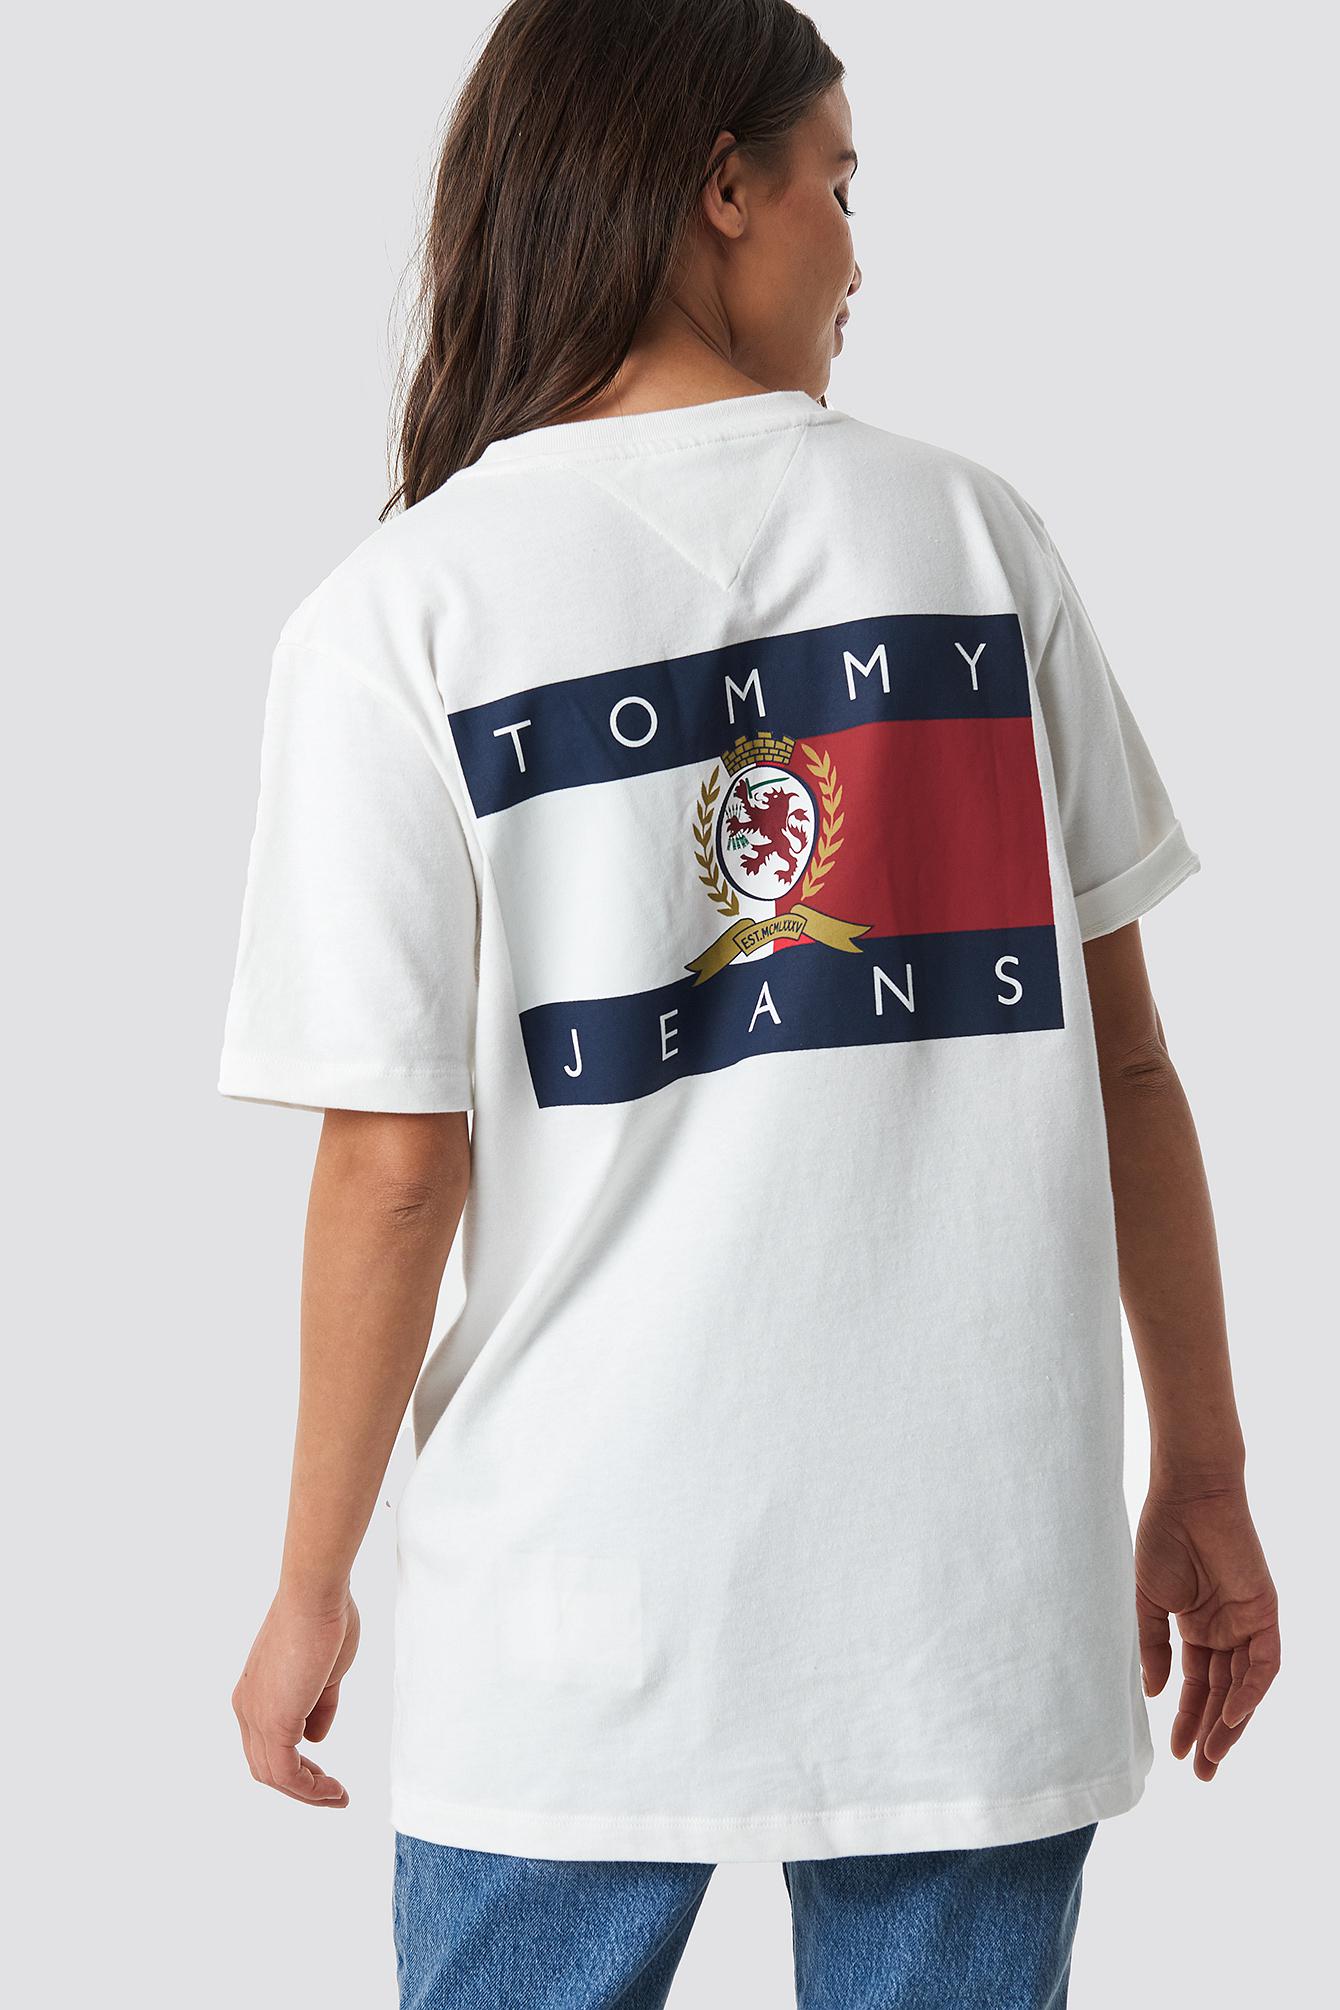 tommy crest flag